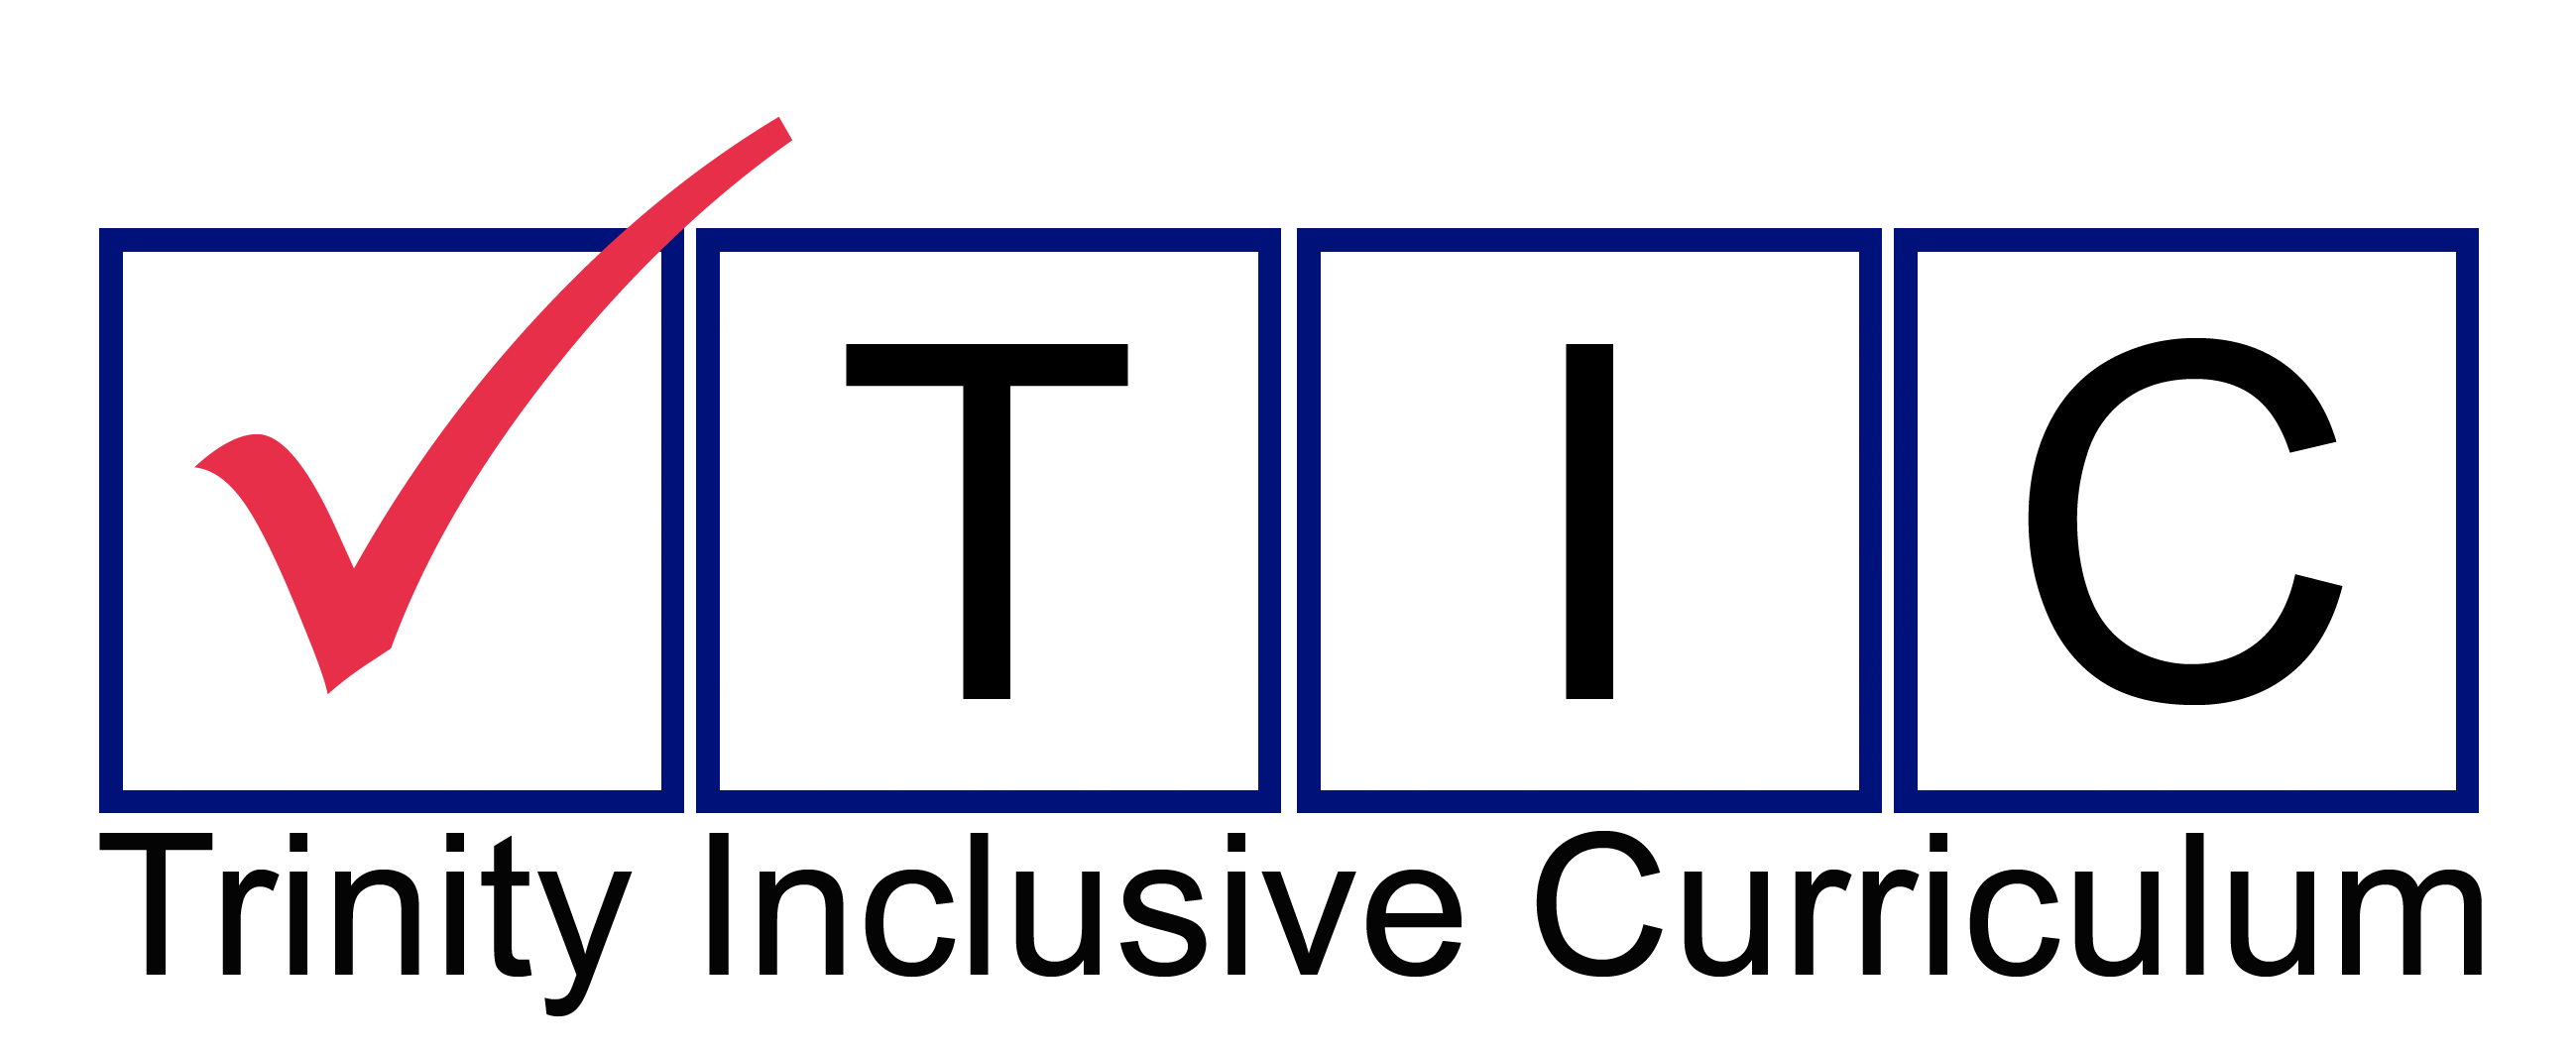 Tic Logo - Inclusive Curriculum New : Trinity College Dublin, the University